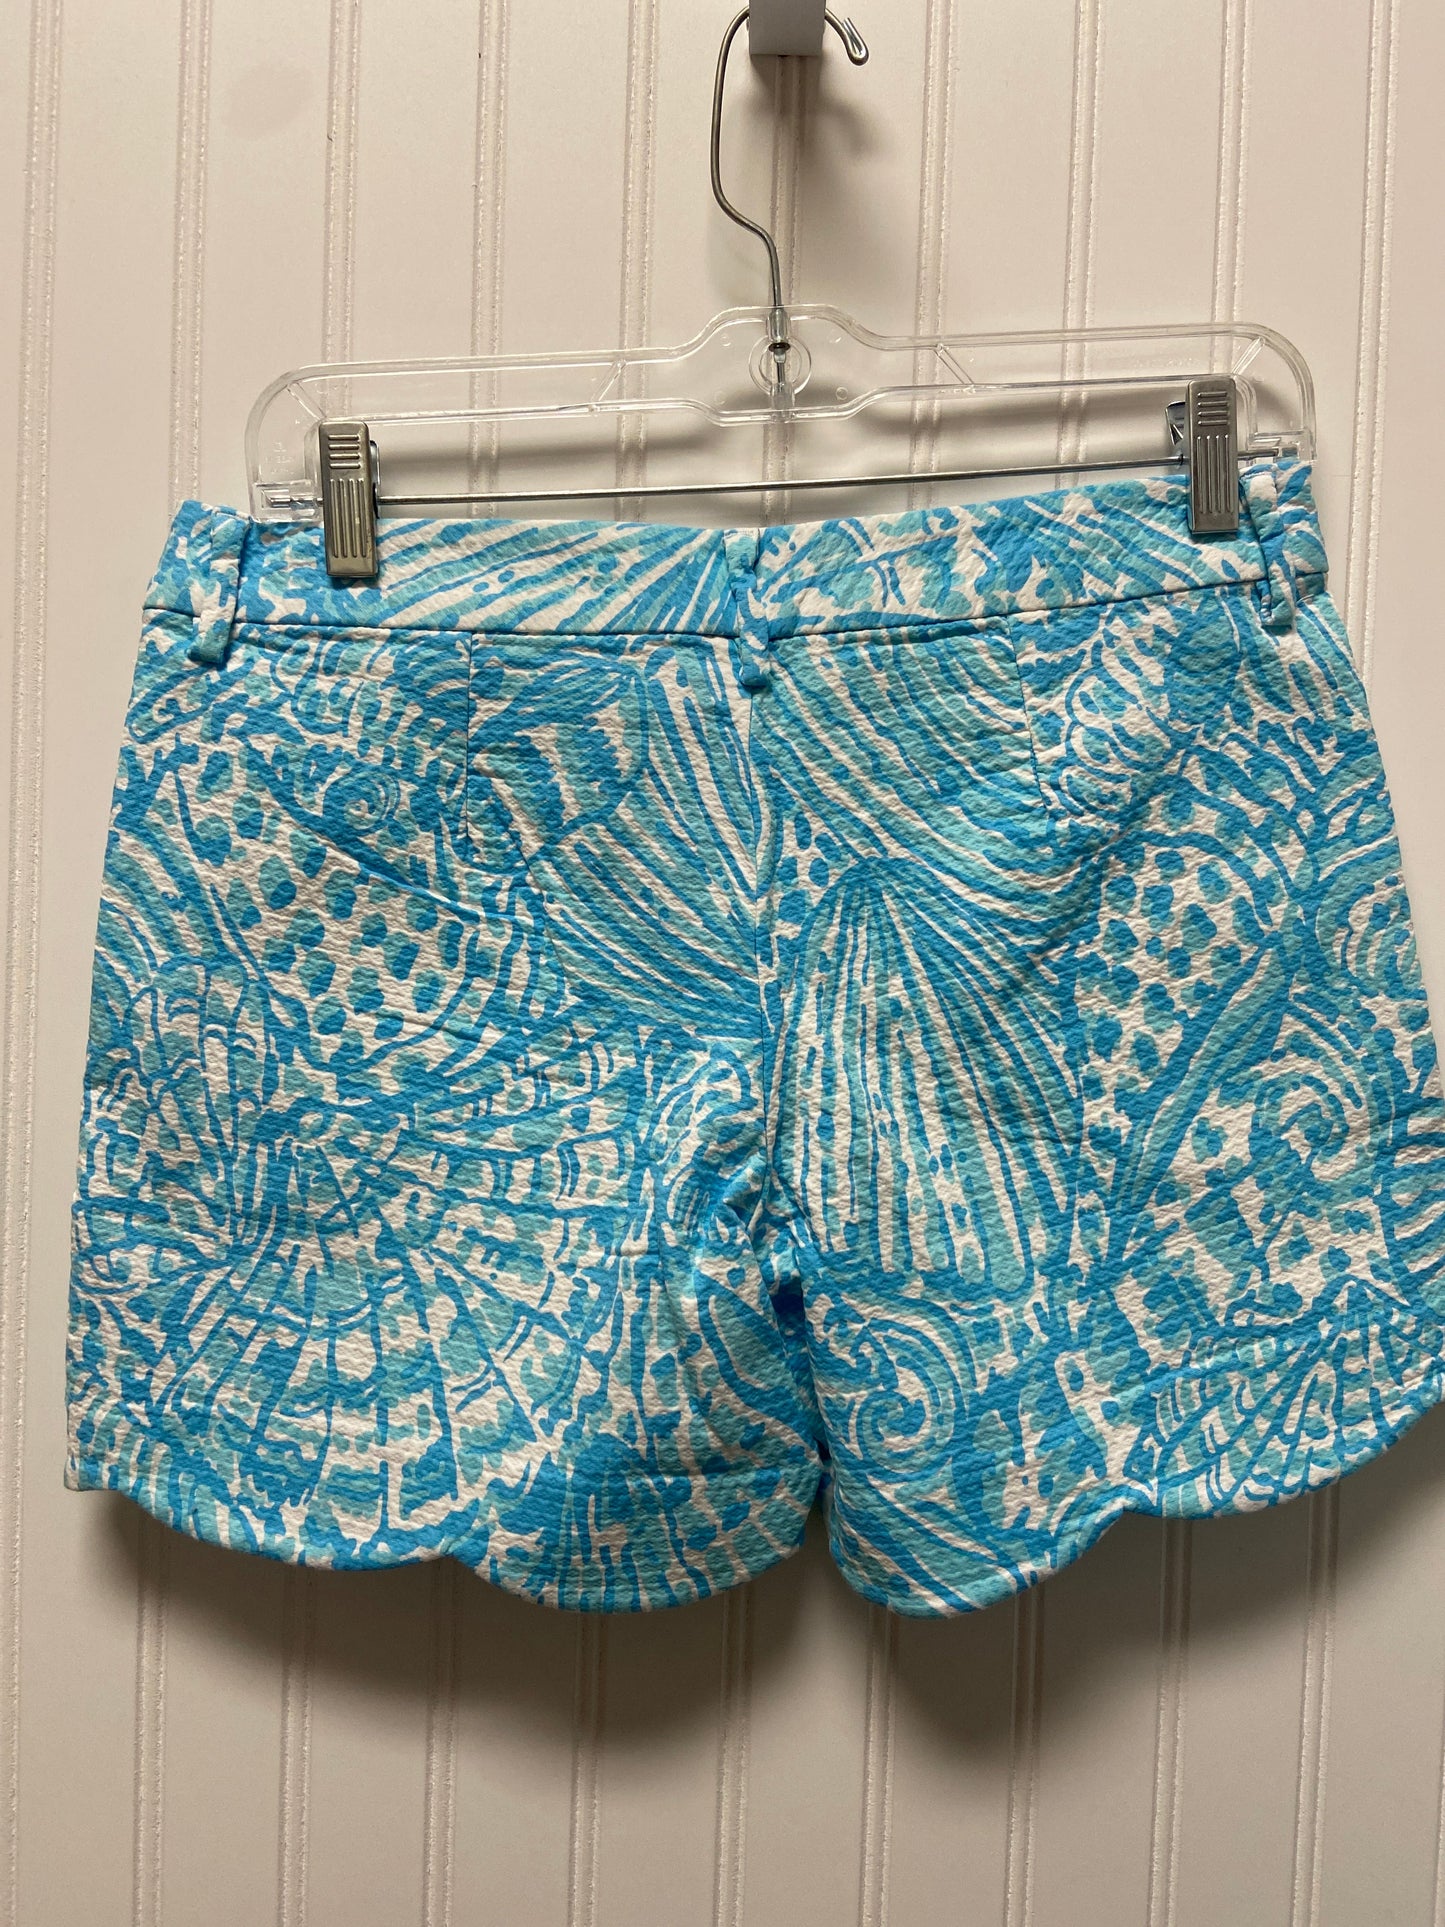 Blue & White Shorts Designer Lilly Pulitzer, Size 0